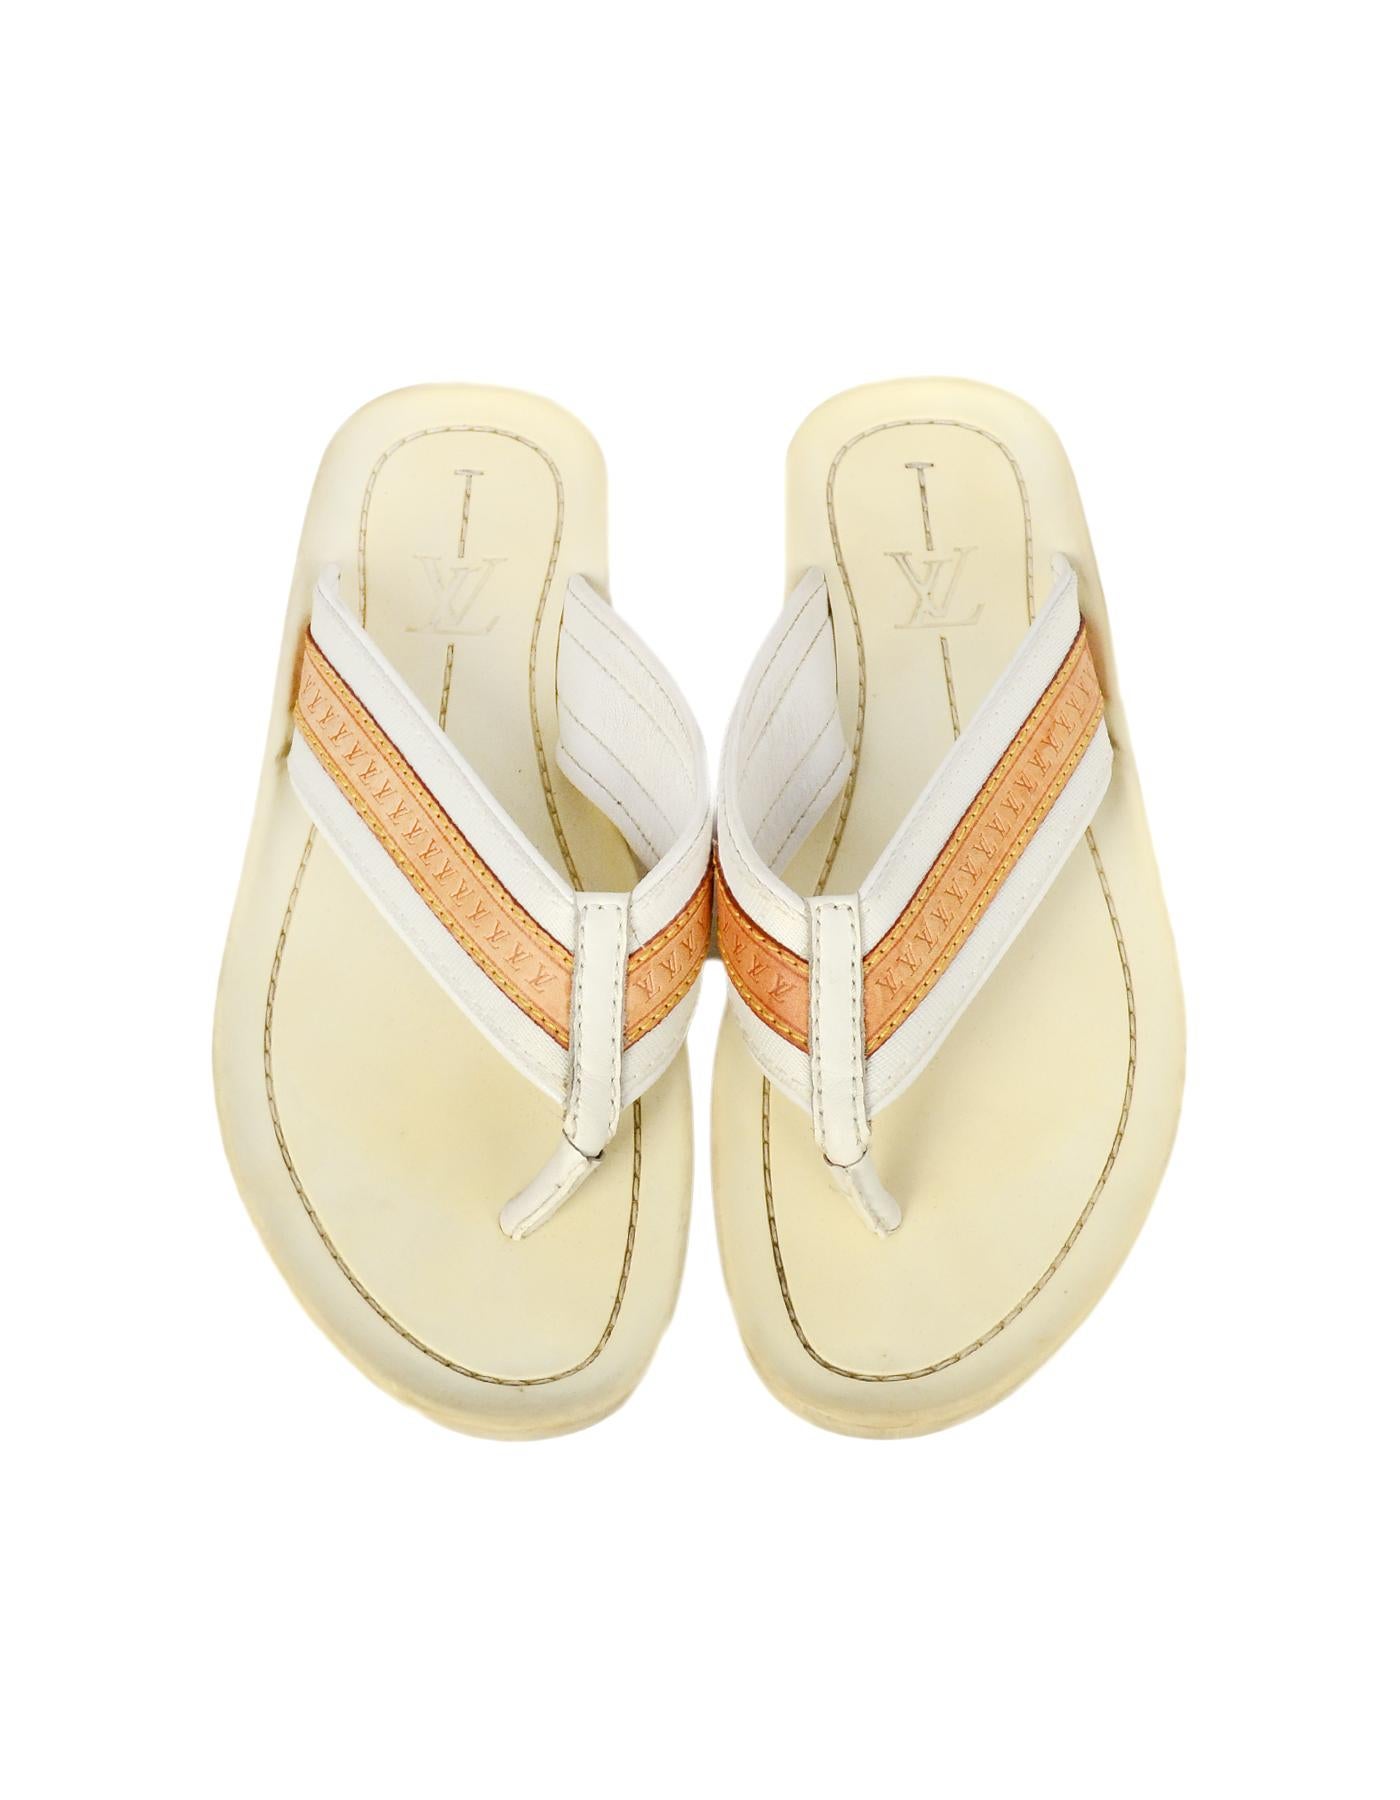 Louis Vuitton White Canvas/Leather Logo Thong Sandals Sz 38 3